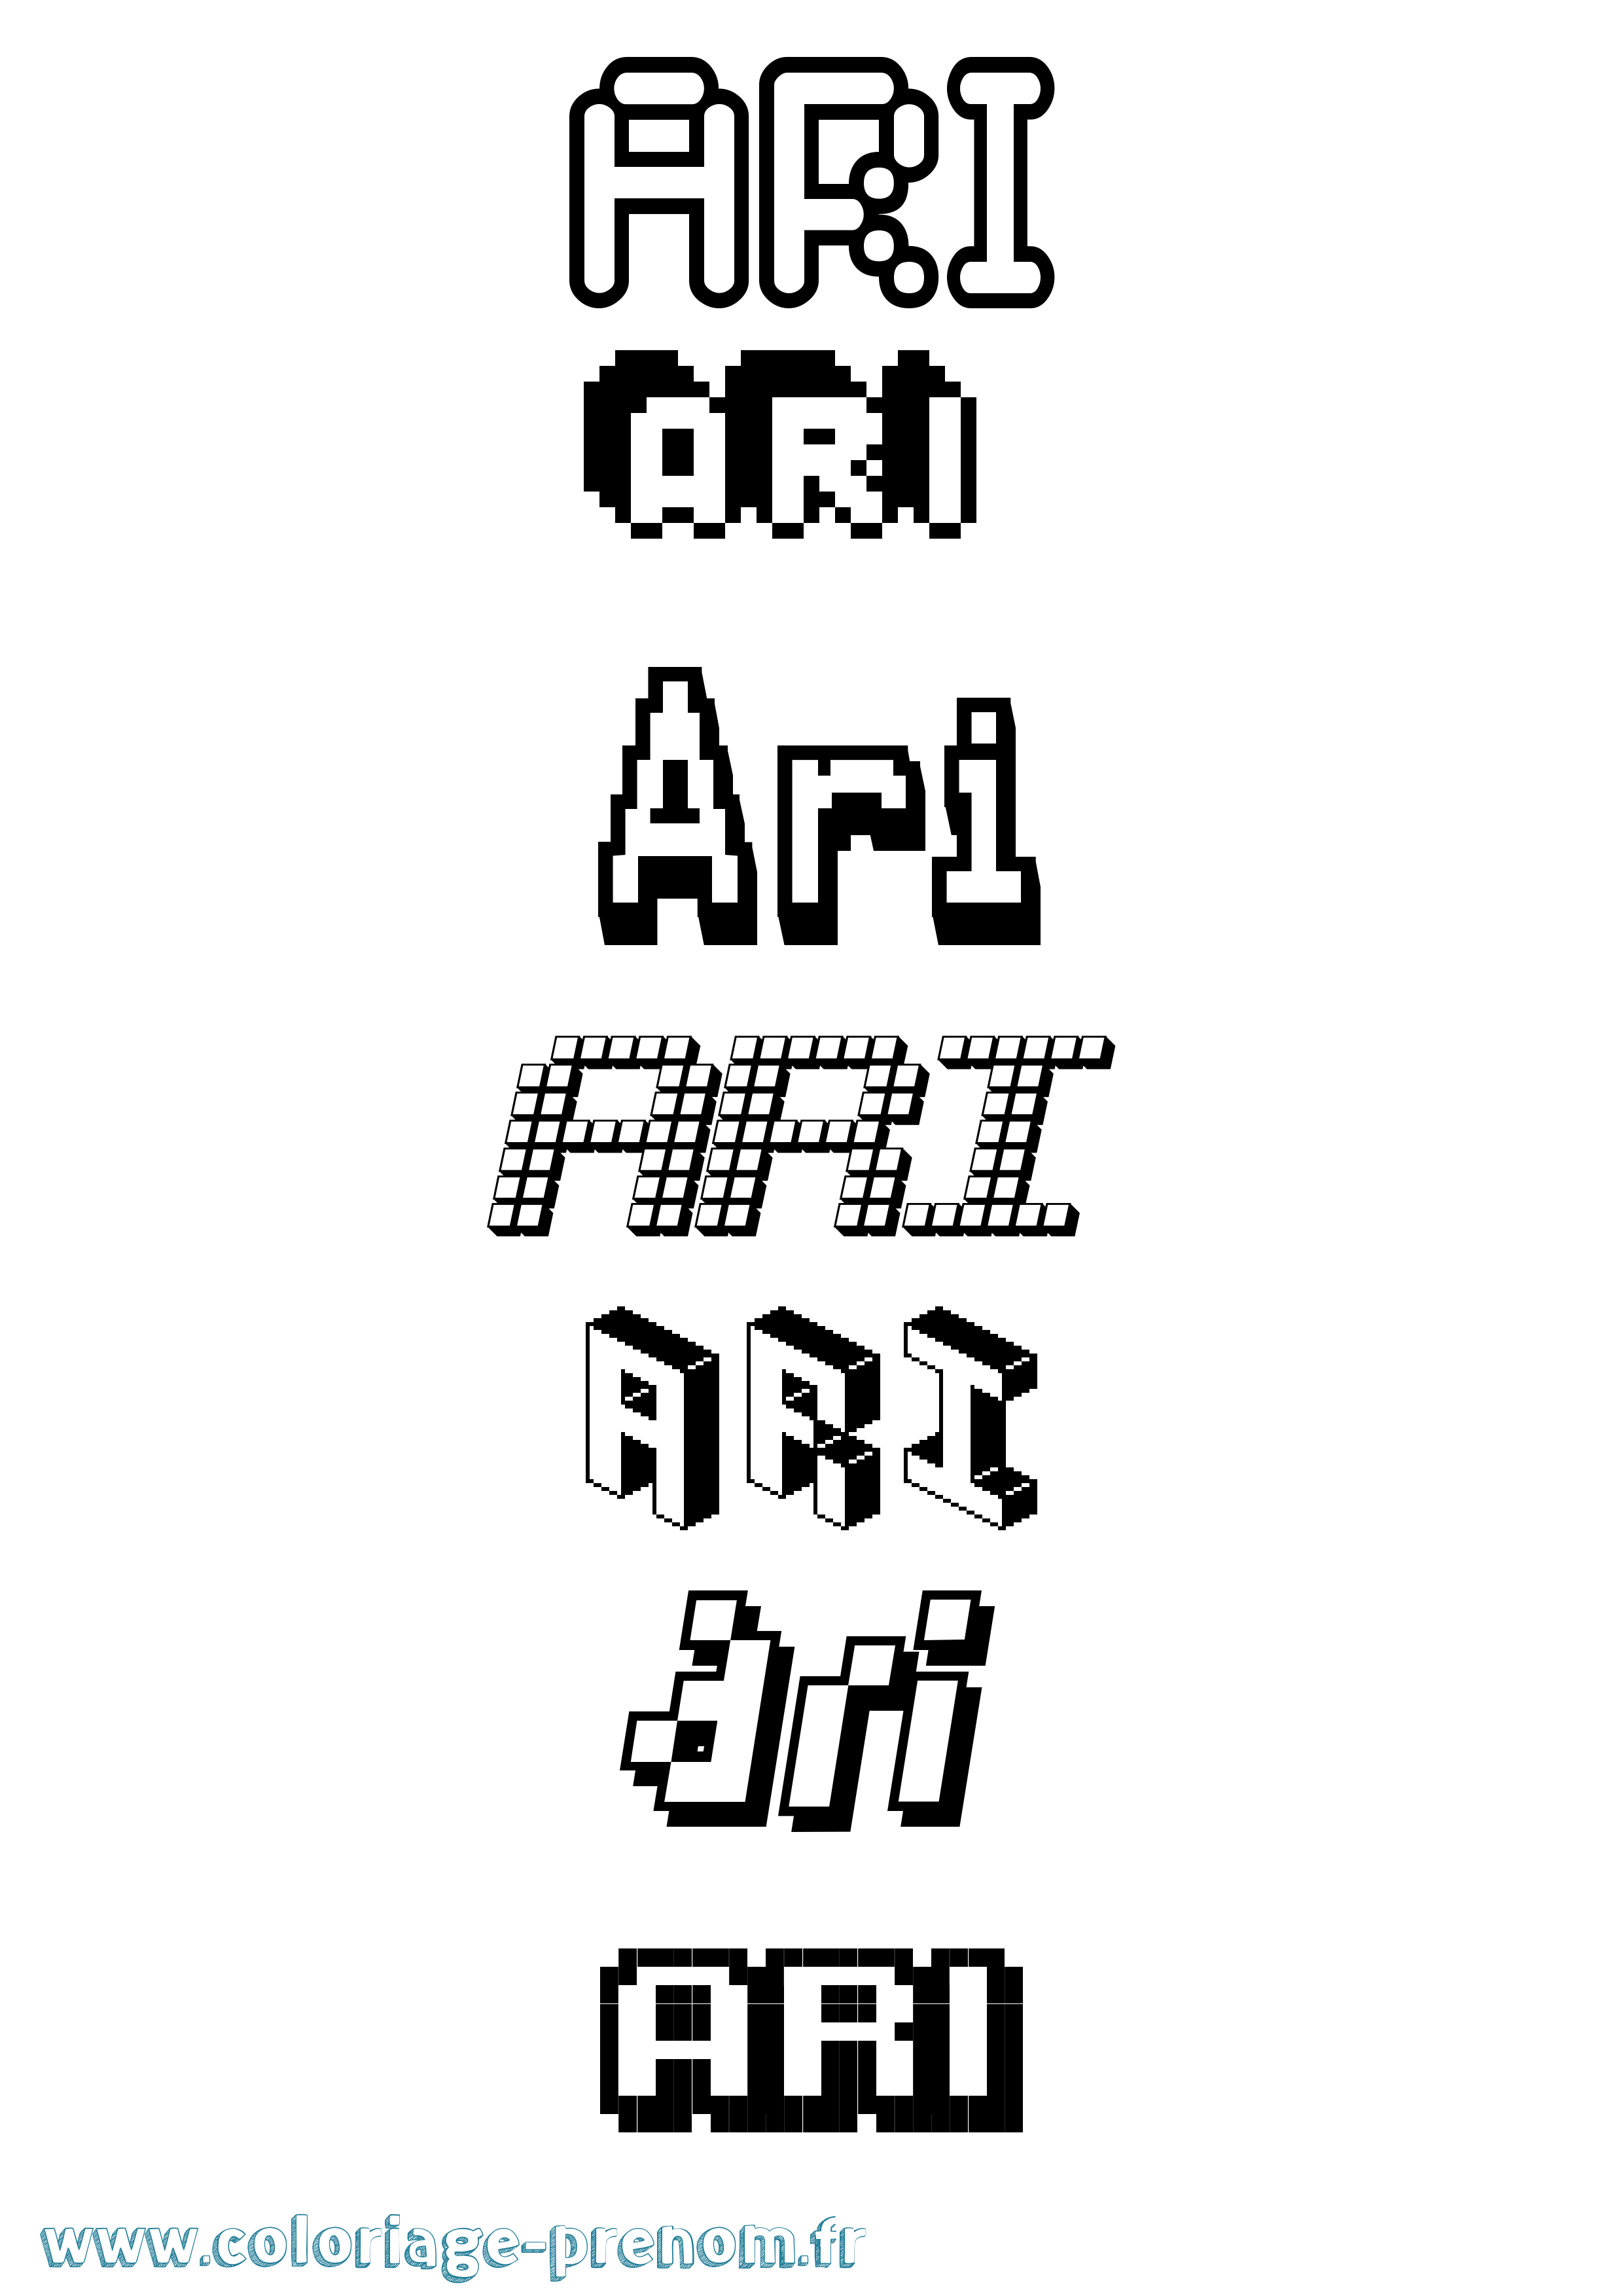 Coloriage prénom Ari Pixel